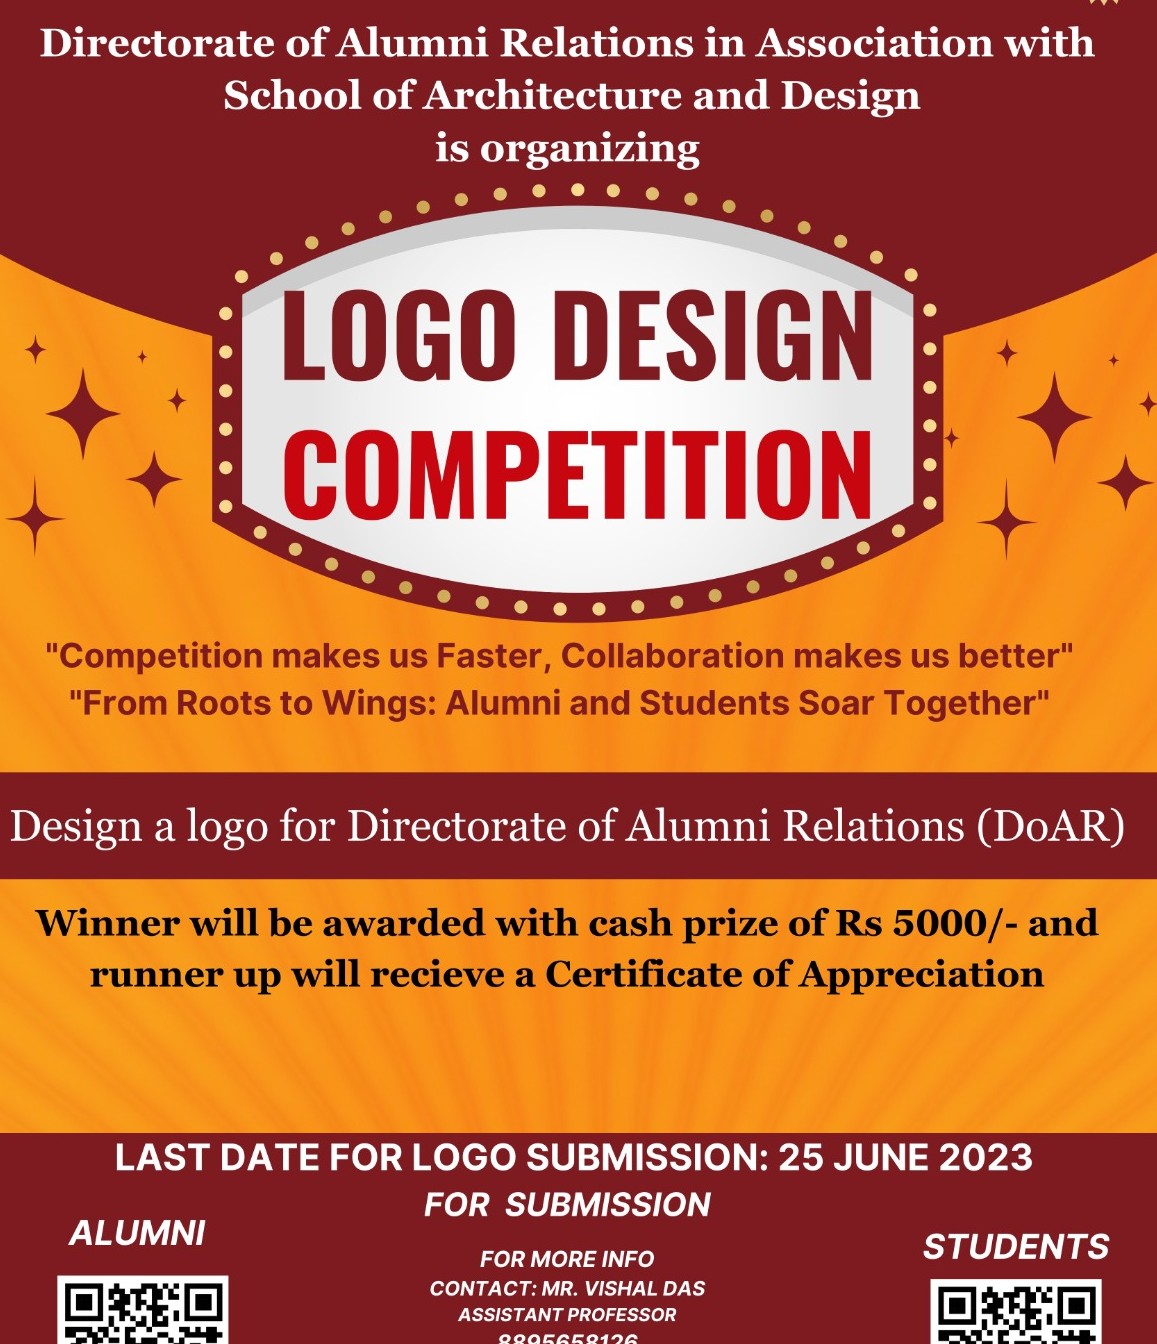 logo design contest